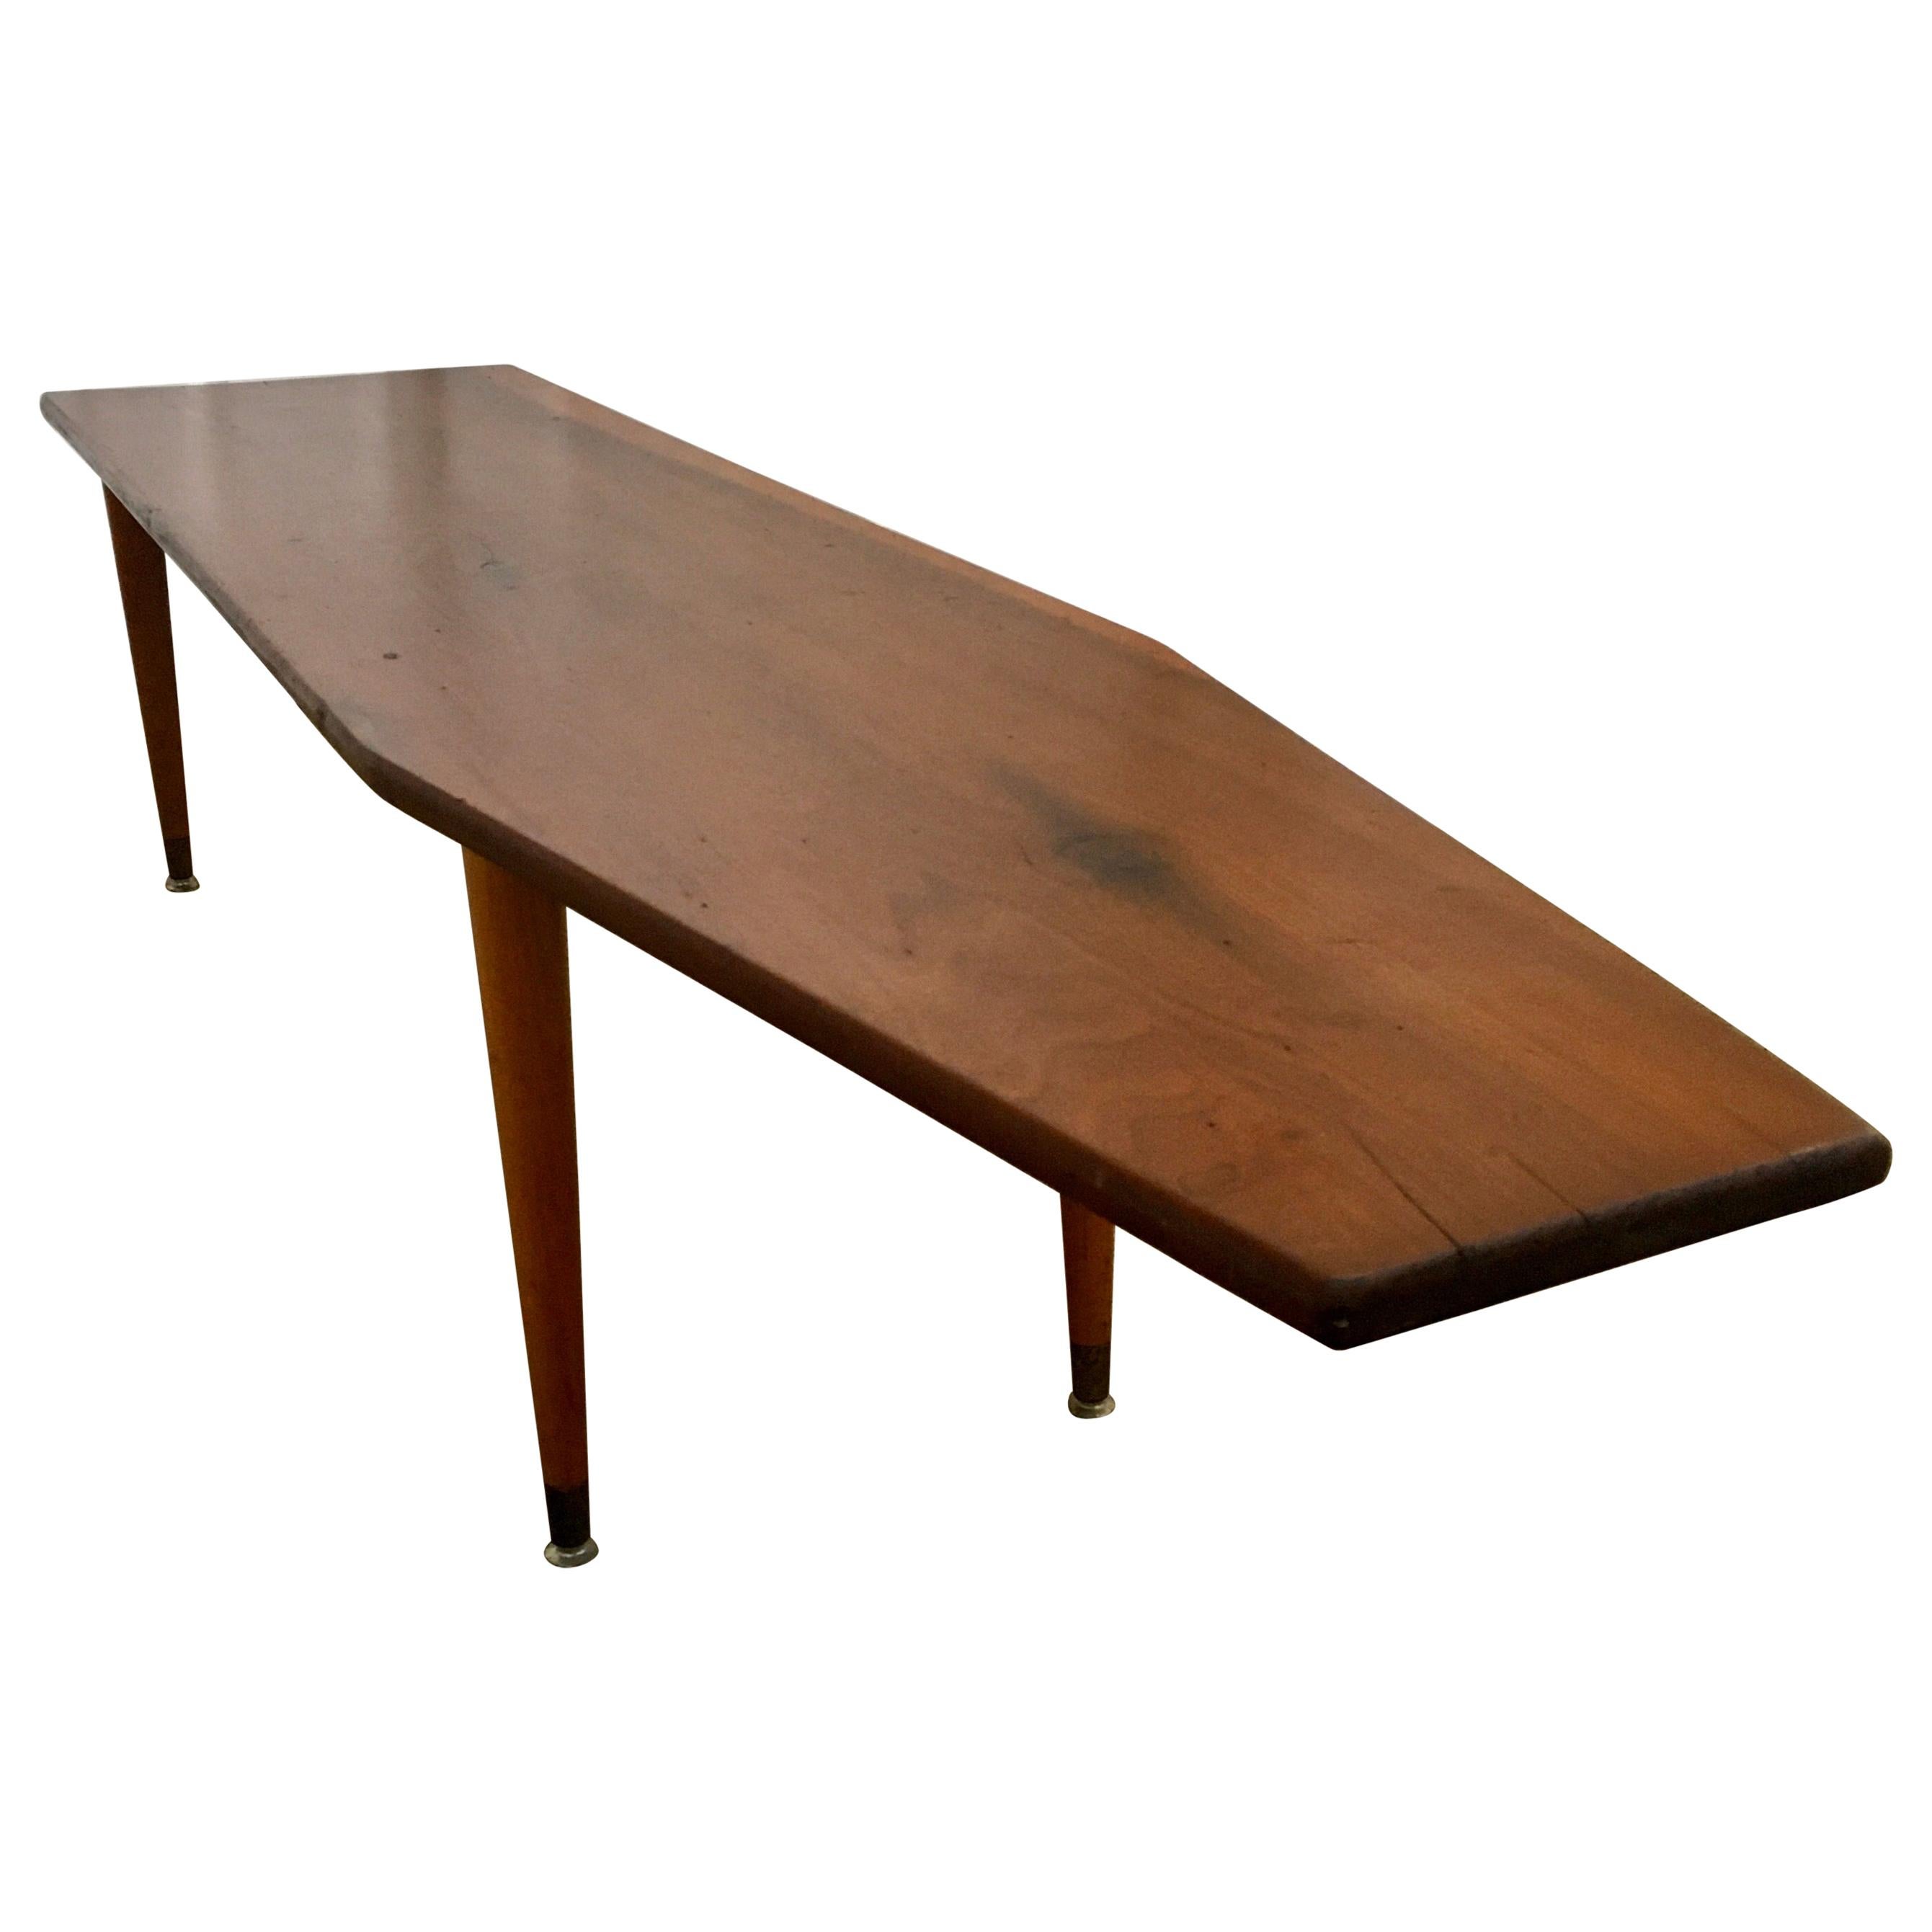 Long Asymmetrical Sculptural Danish Style Wood Coffee Table, Mid-Century Modern